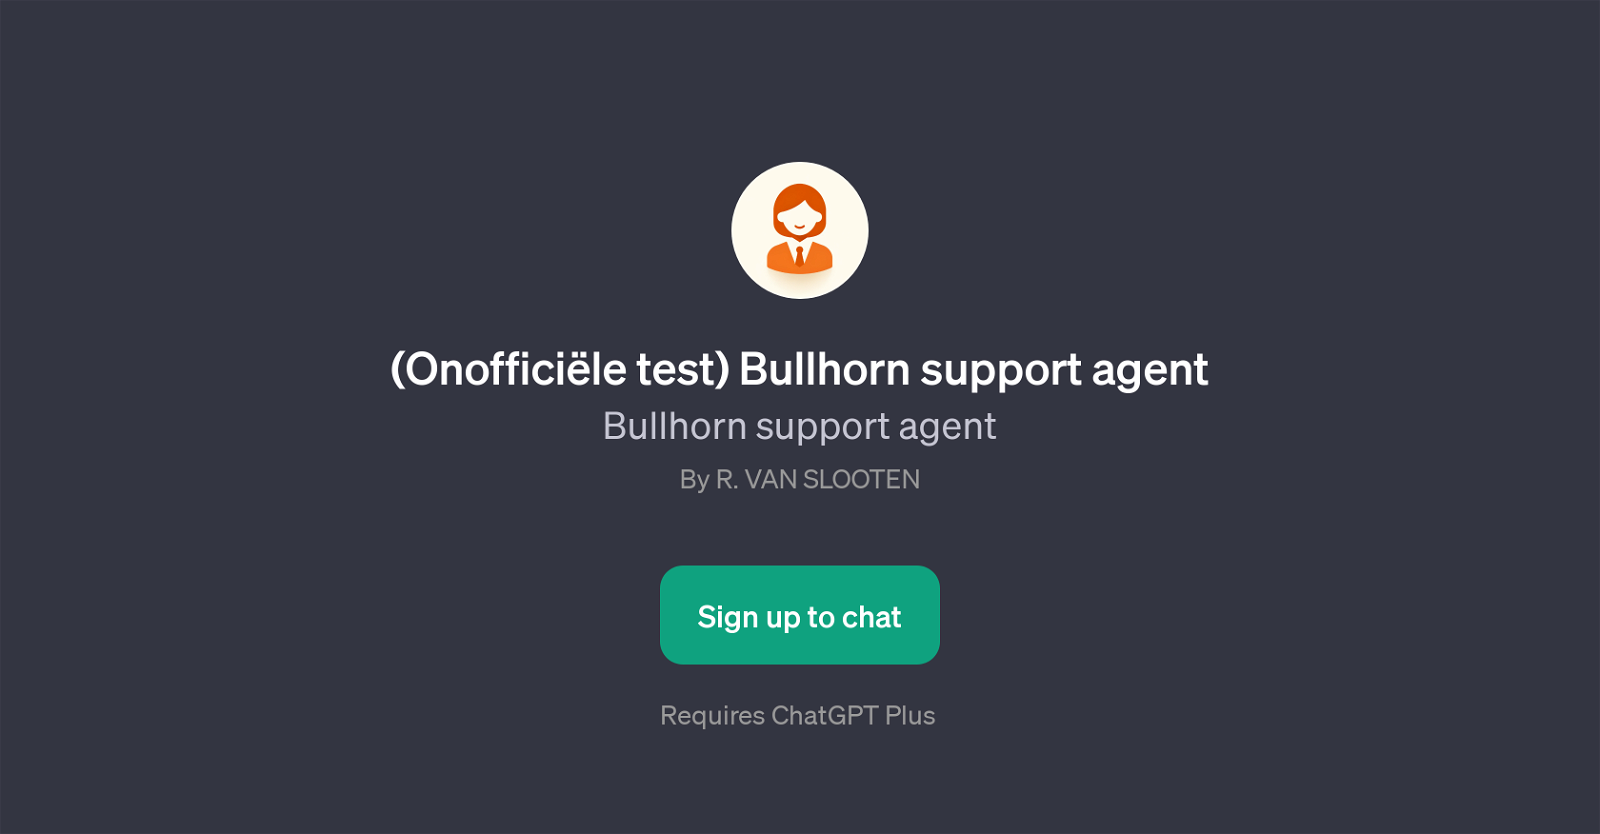 (Onofficile test) Bullhorn support agent website